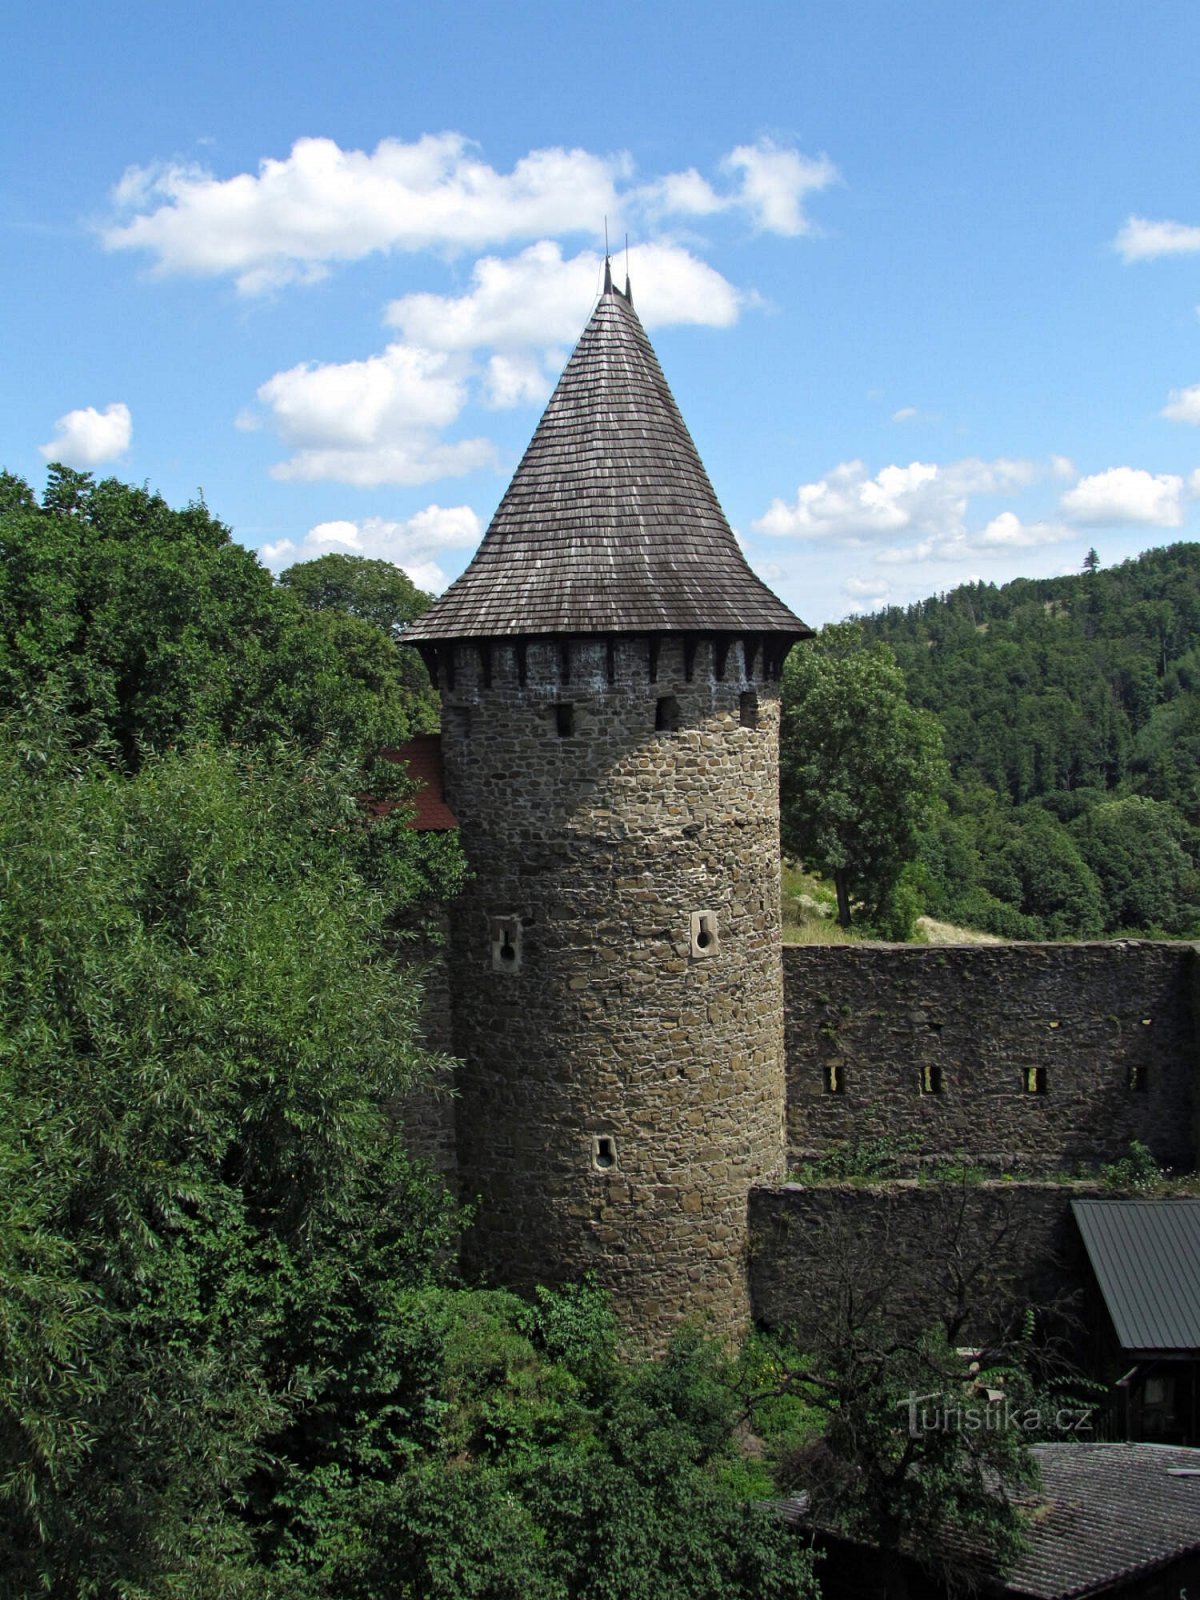 Helfštýn Castle sightseeing